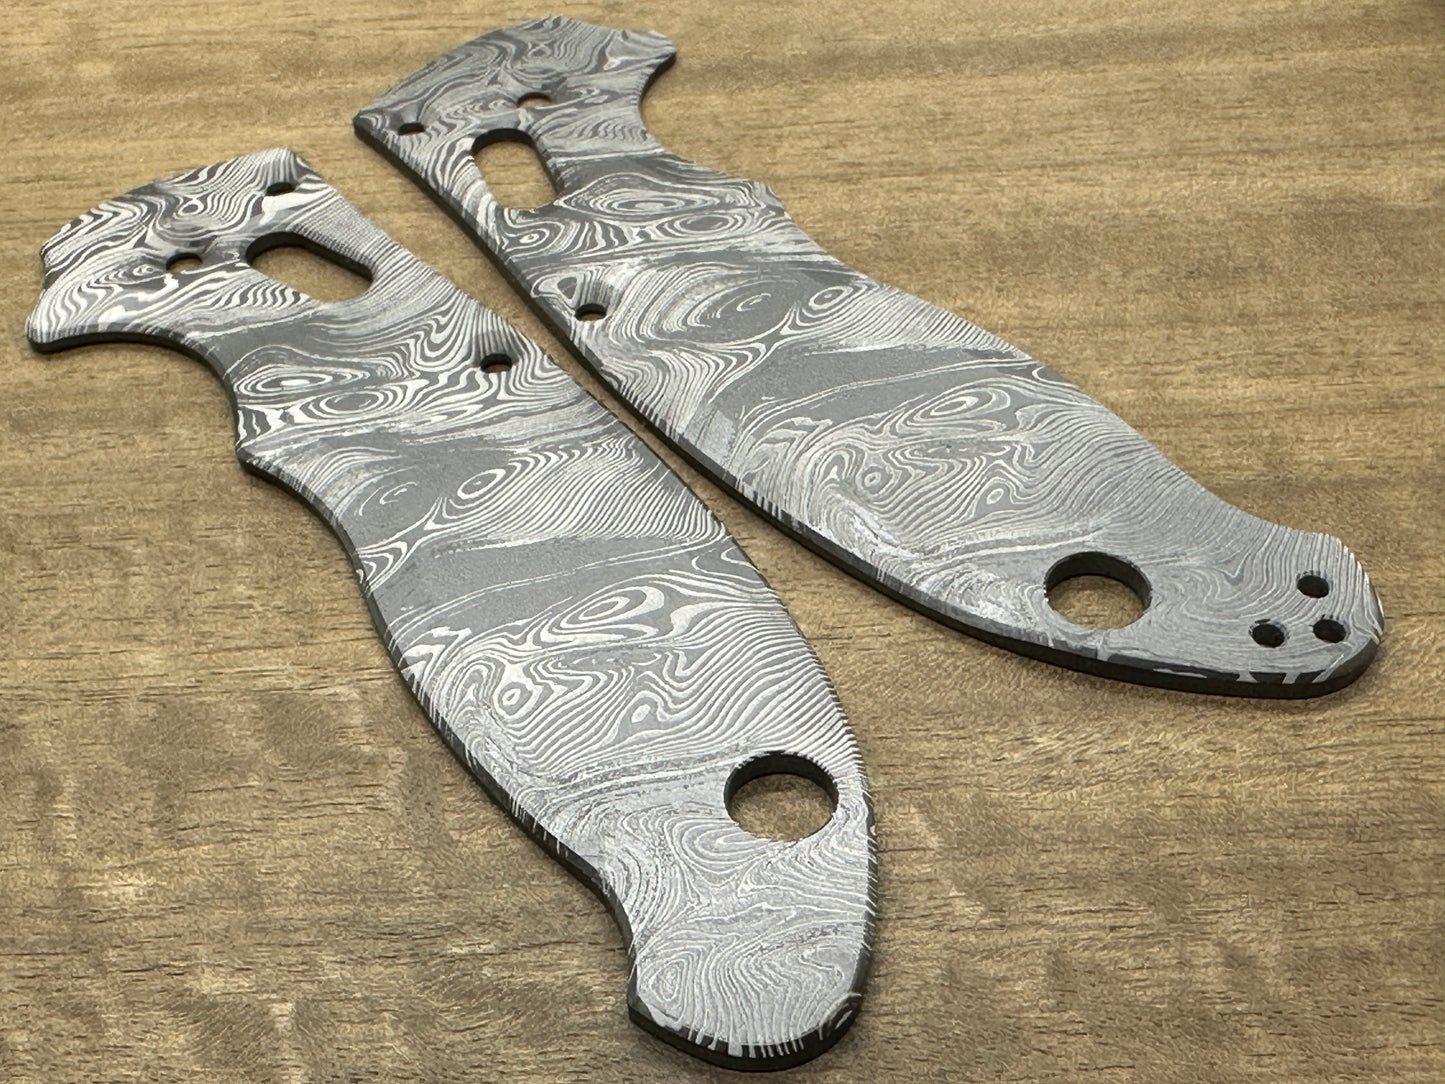 Dama TWIST pattern engraved Zirconium scales for Spyderco MANIX 2